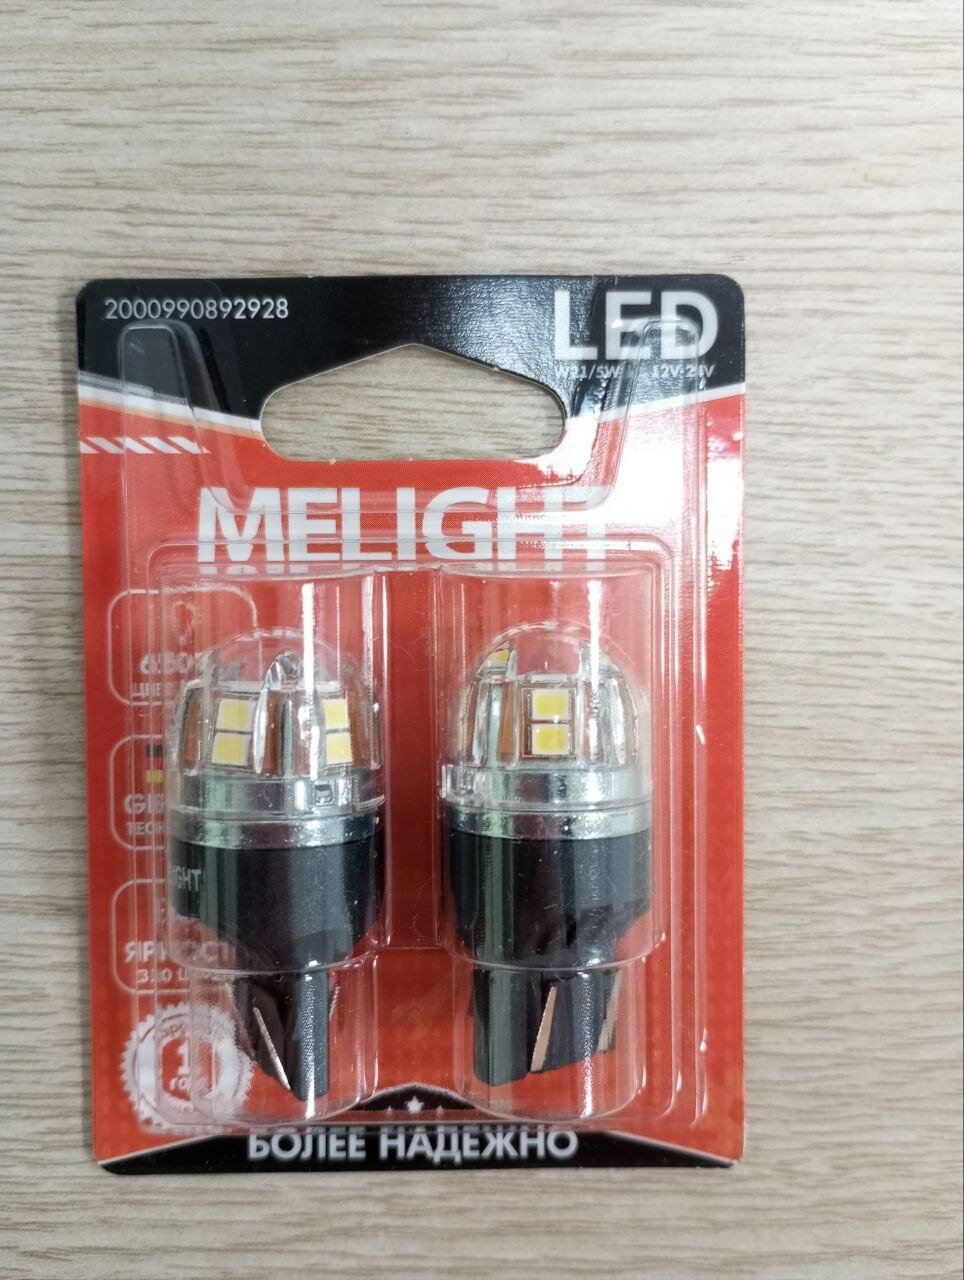 LED лампы MeLight светодиодные T20 W21/5W, чип 2835 Osram CANBUS 15SMD